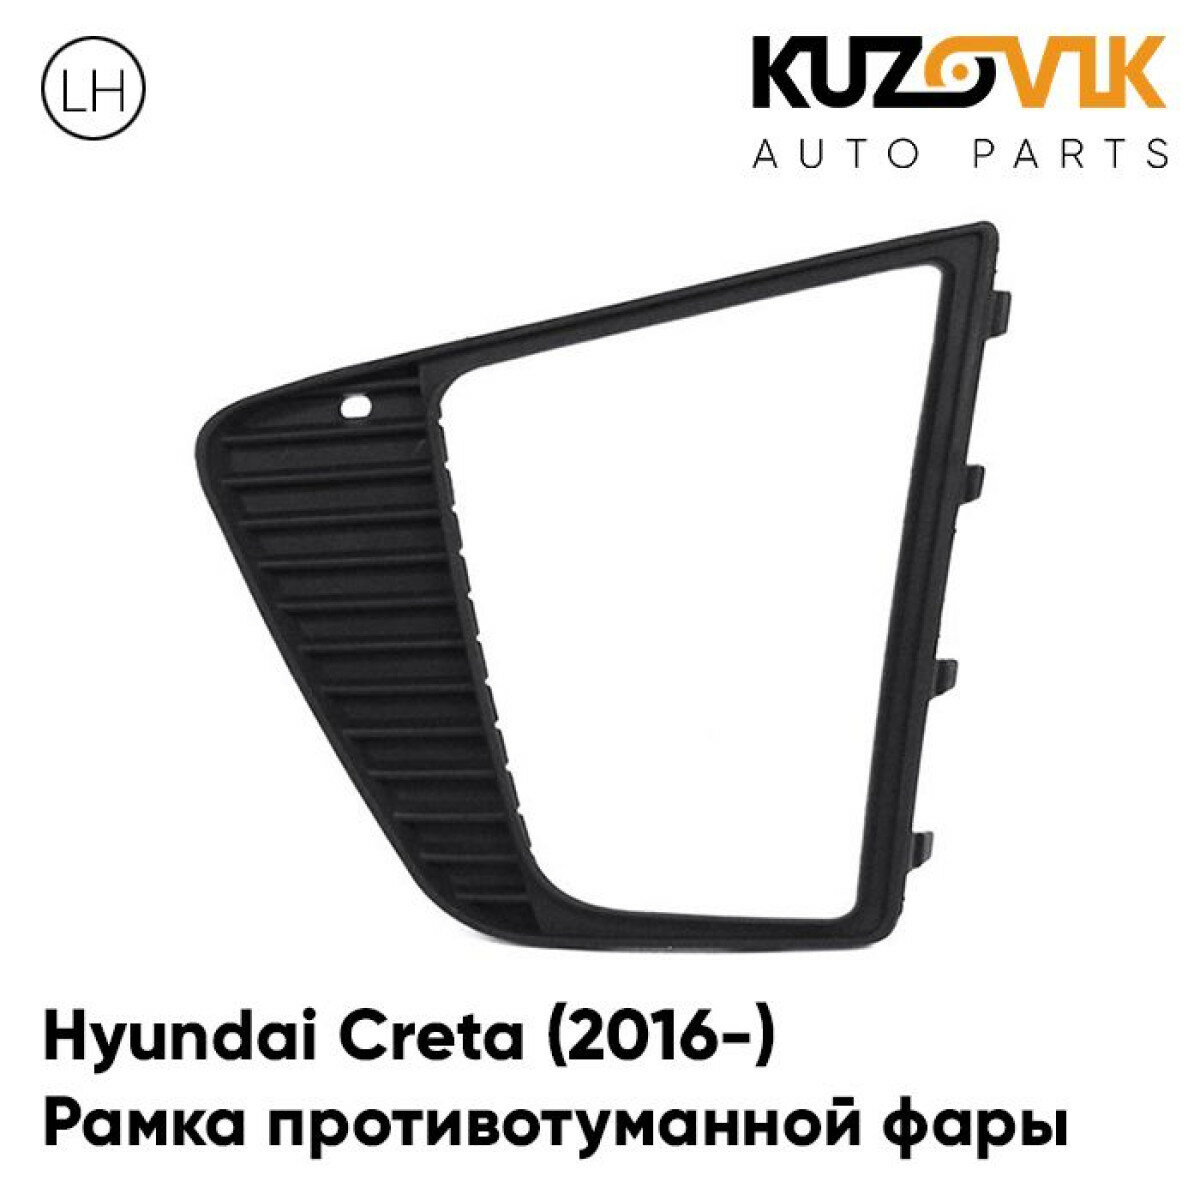 Рамка противотуманной фары левая Hyundai Creta Хендай Крета (2016-) решётка накладка бампера